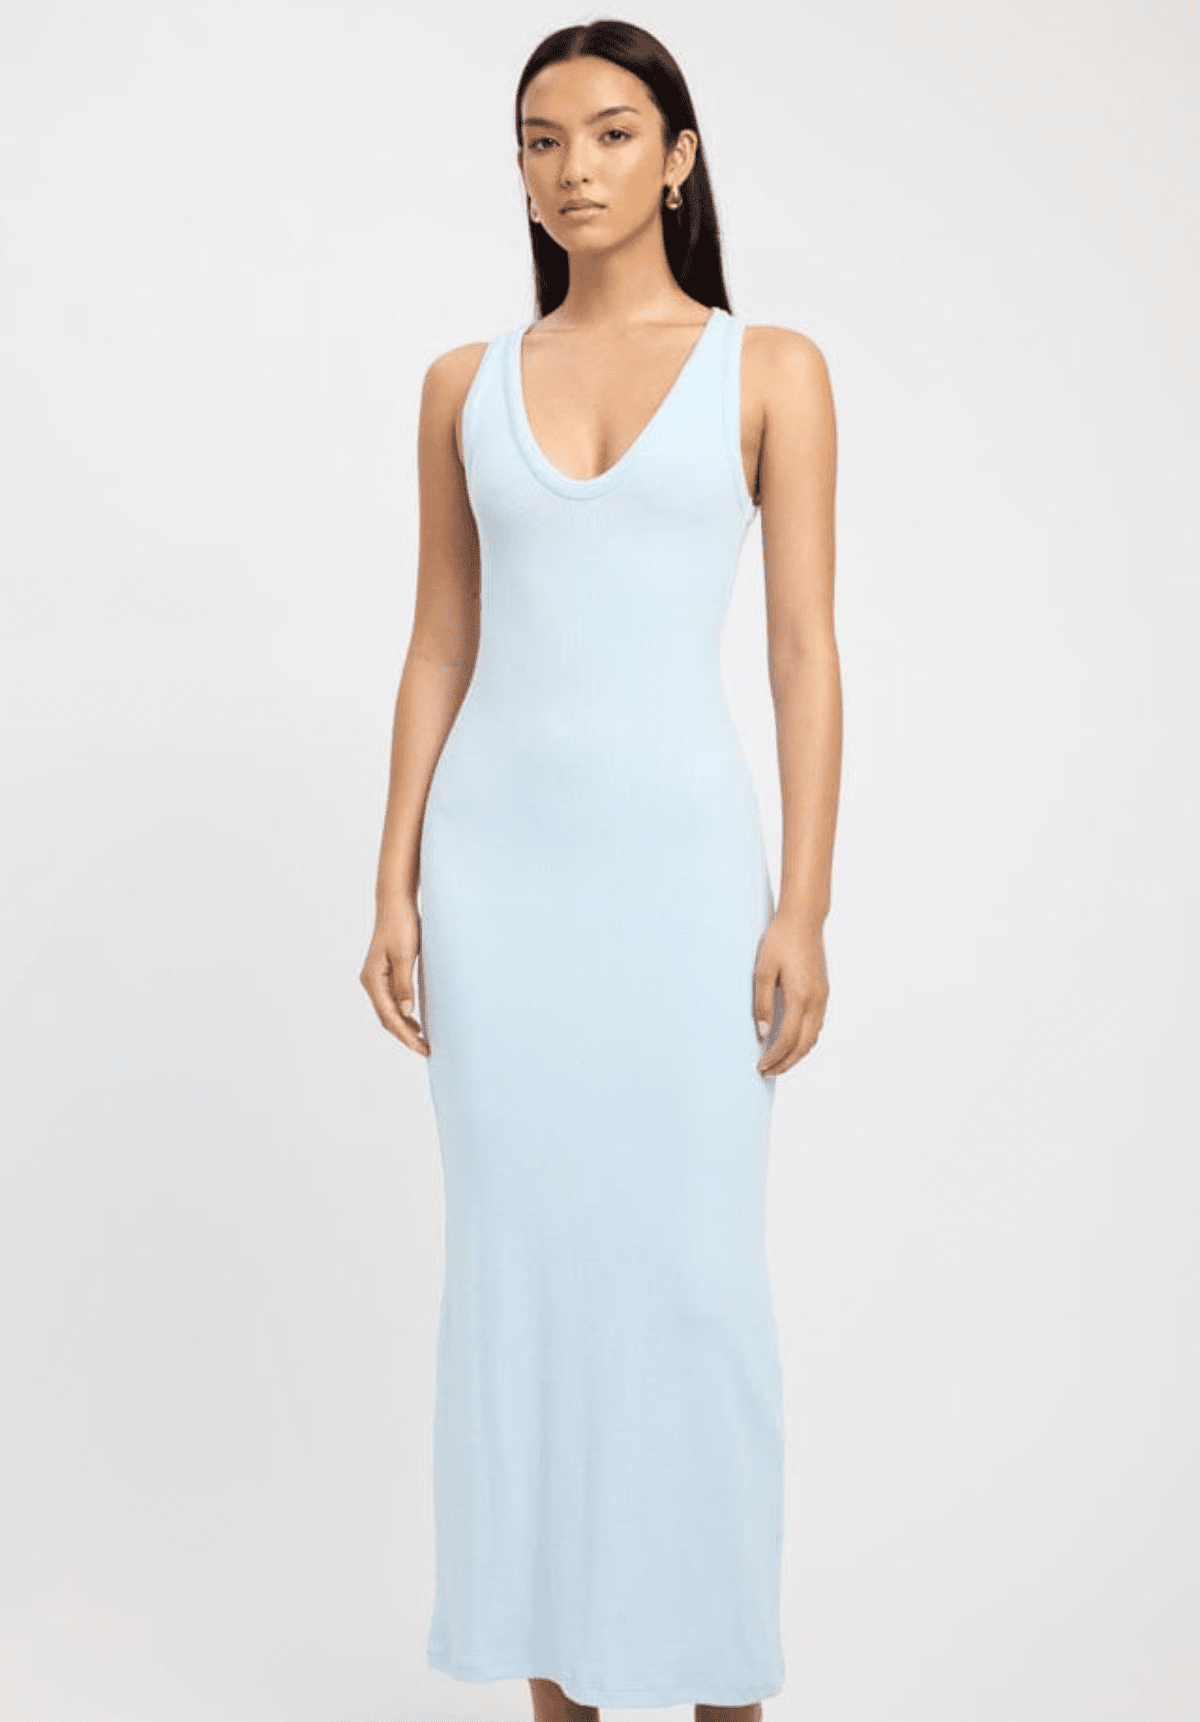 Laney Dress - Baby Blue dresses Kookai 